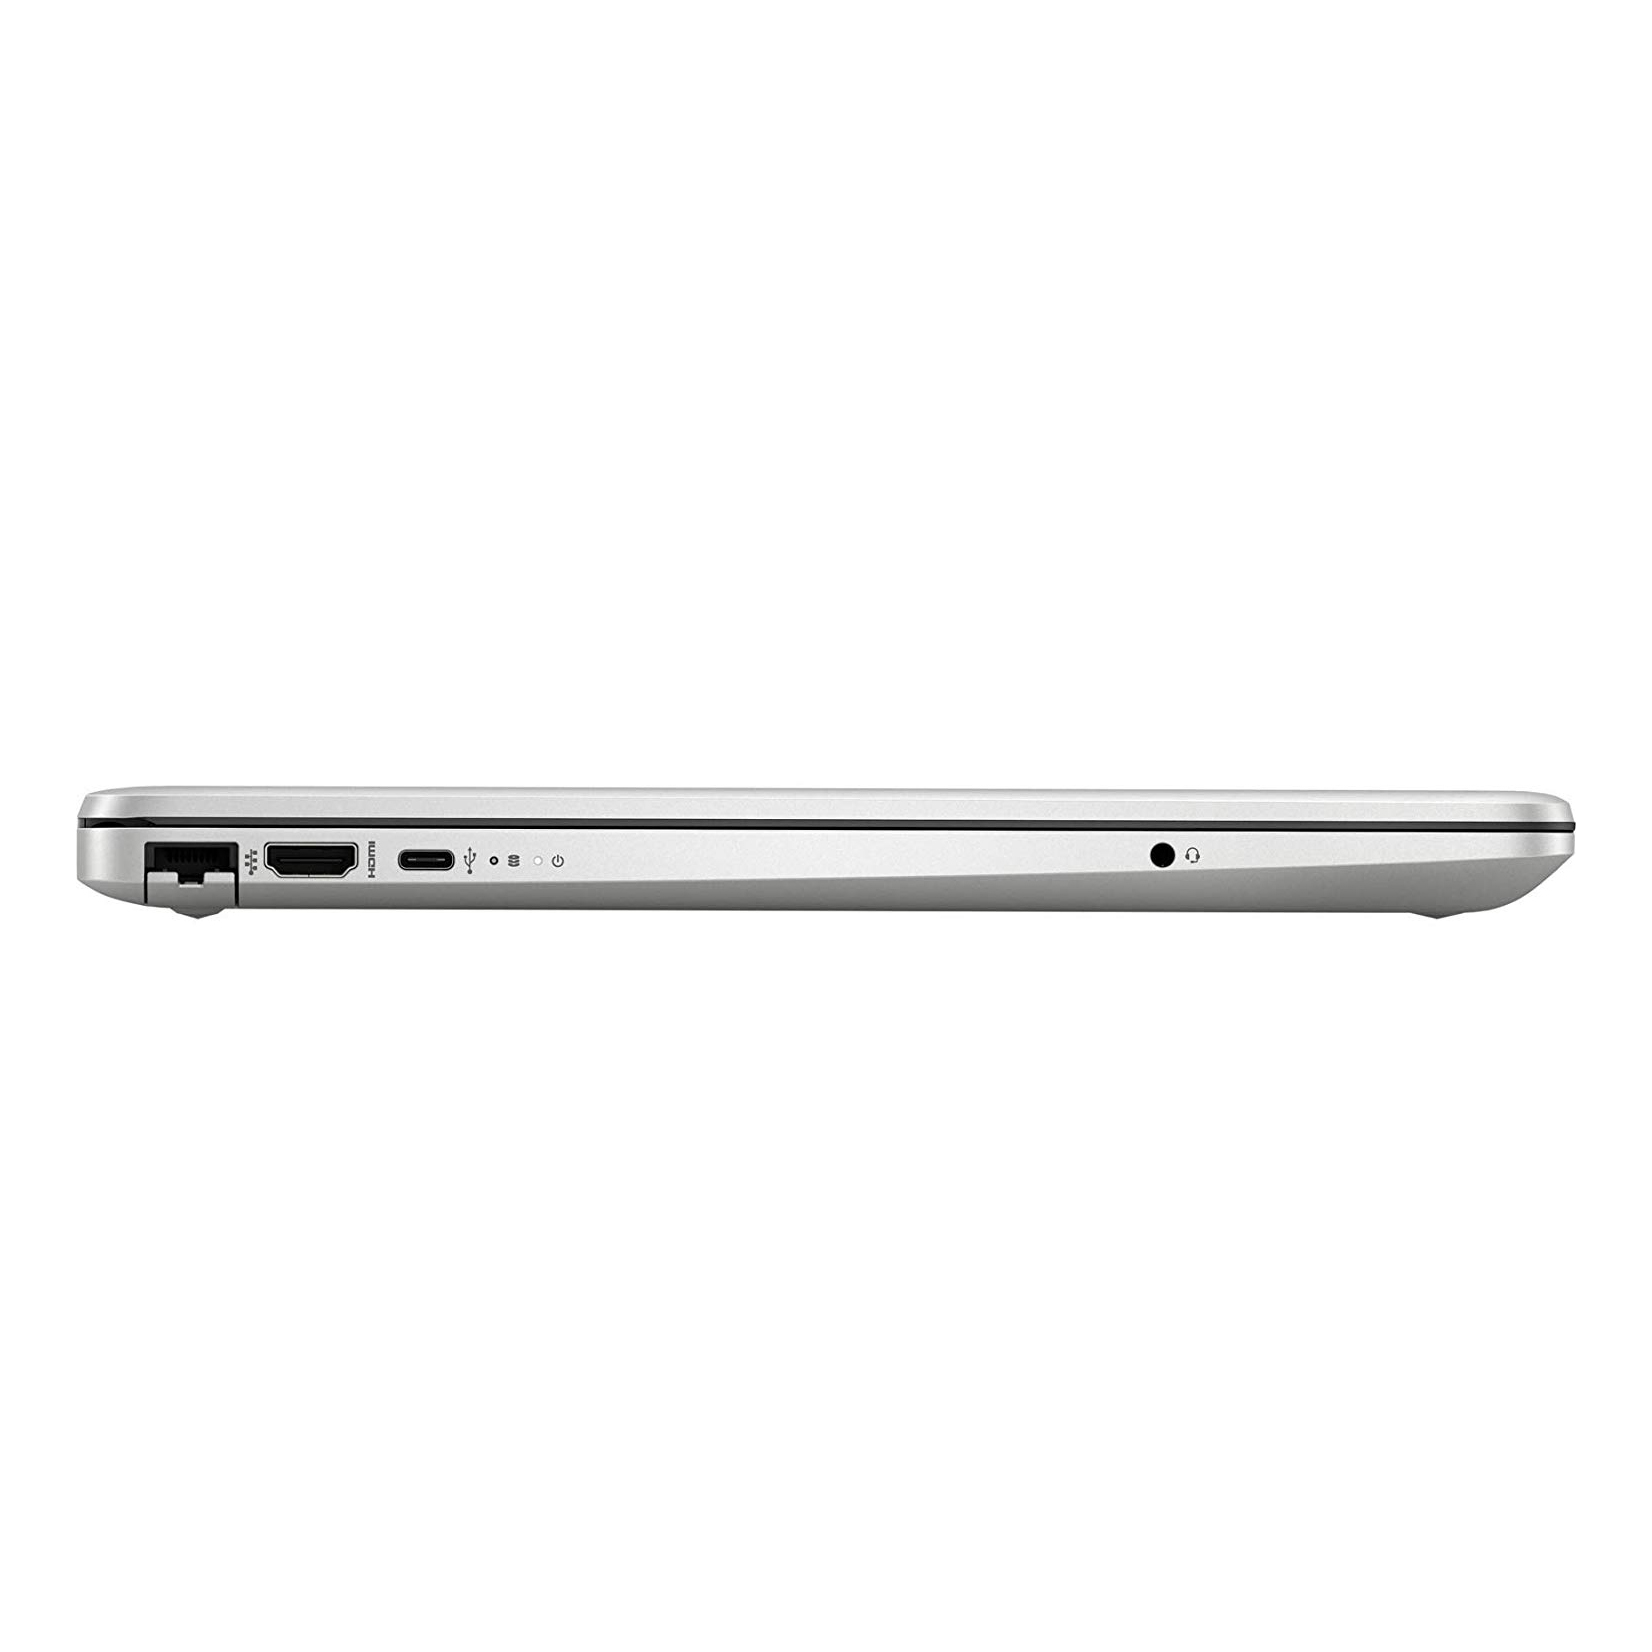 Laptop HP 15S Du0068TX (i5 8265U/8GB RAM/1TB HDD/120GB SSD M.2 Sata/MX130 2GB/15.6 inch HD/Win 10) - 8AG28PA